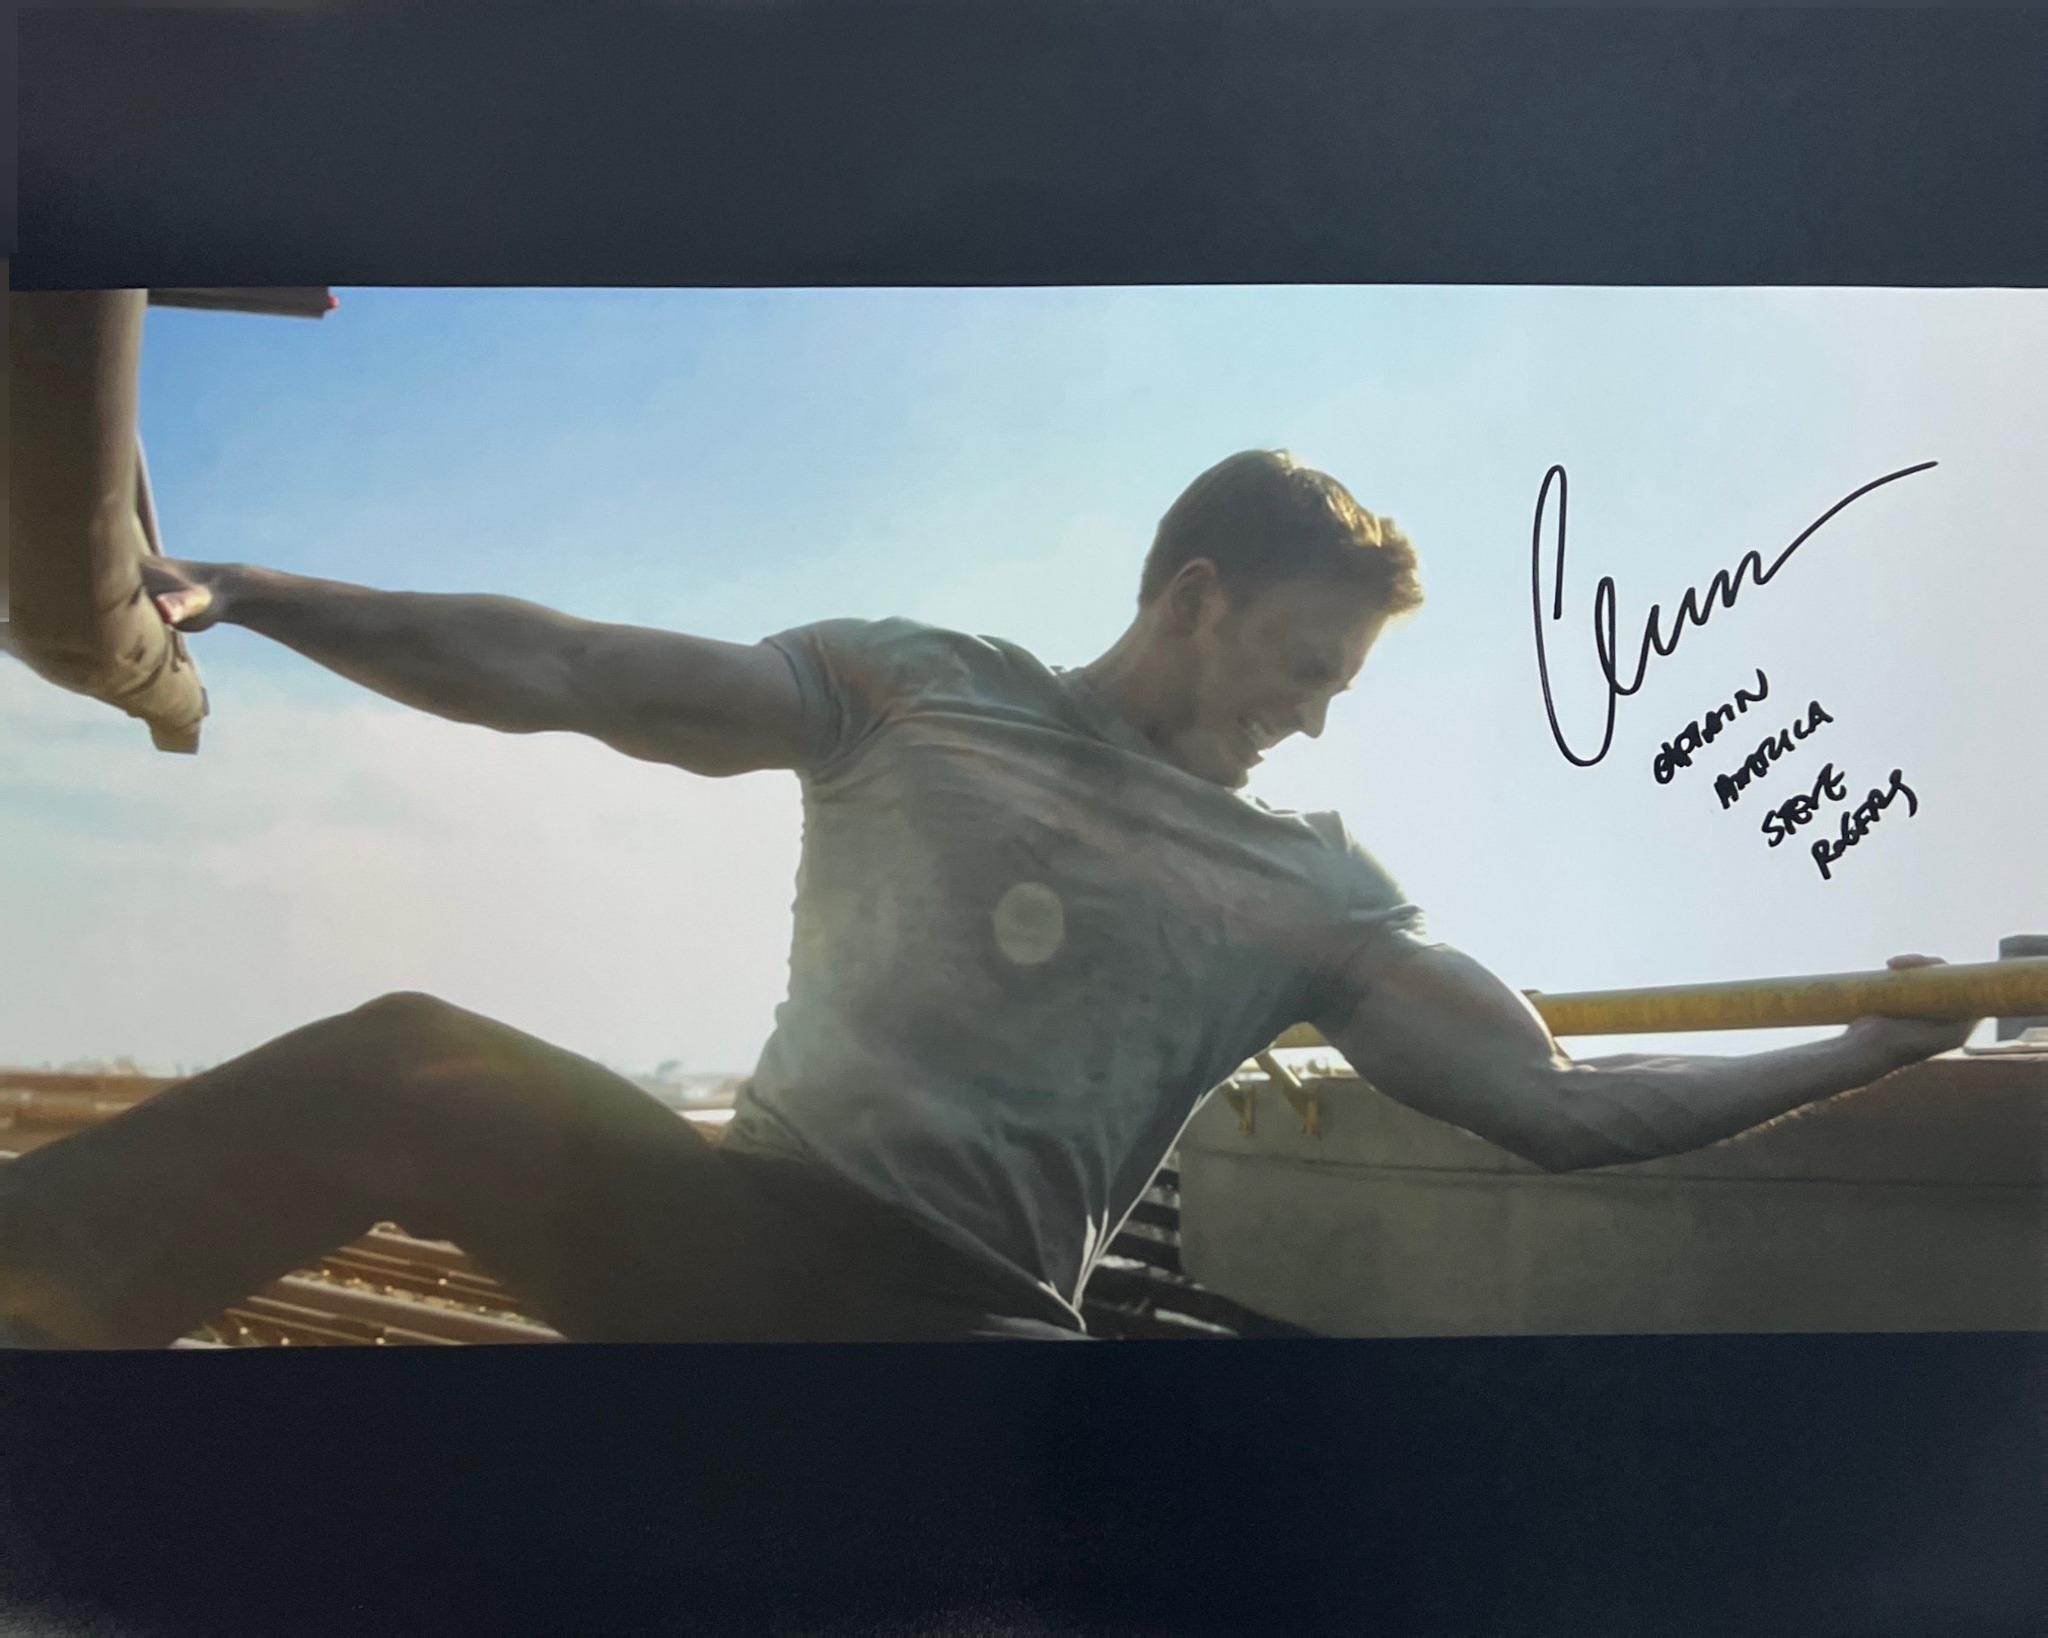 Autograph COA Captain America 11x17 Poster